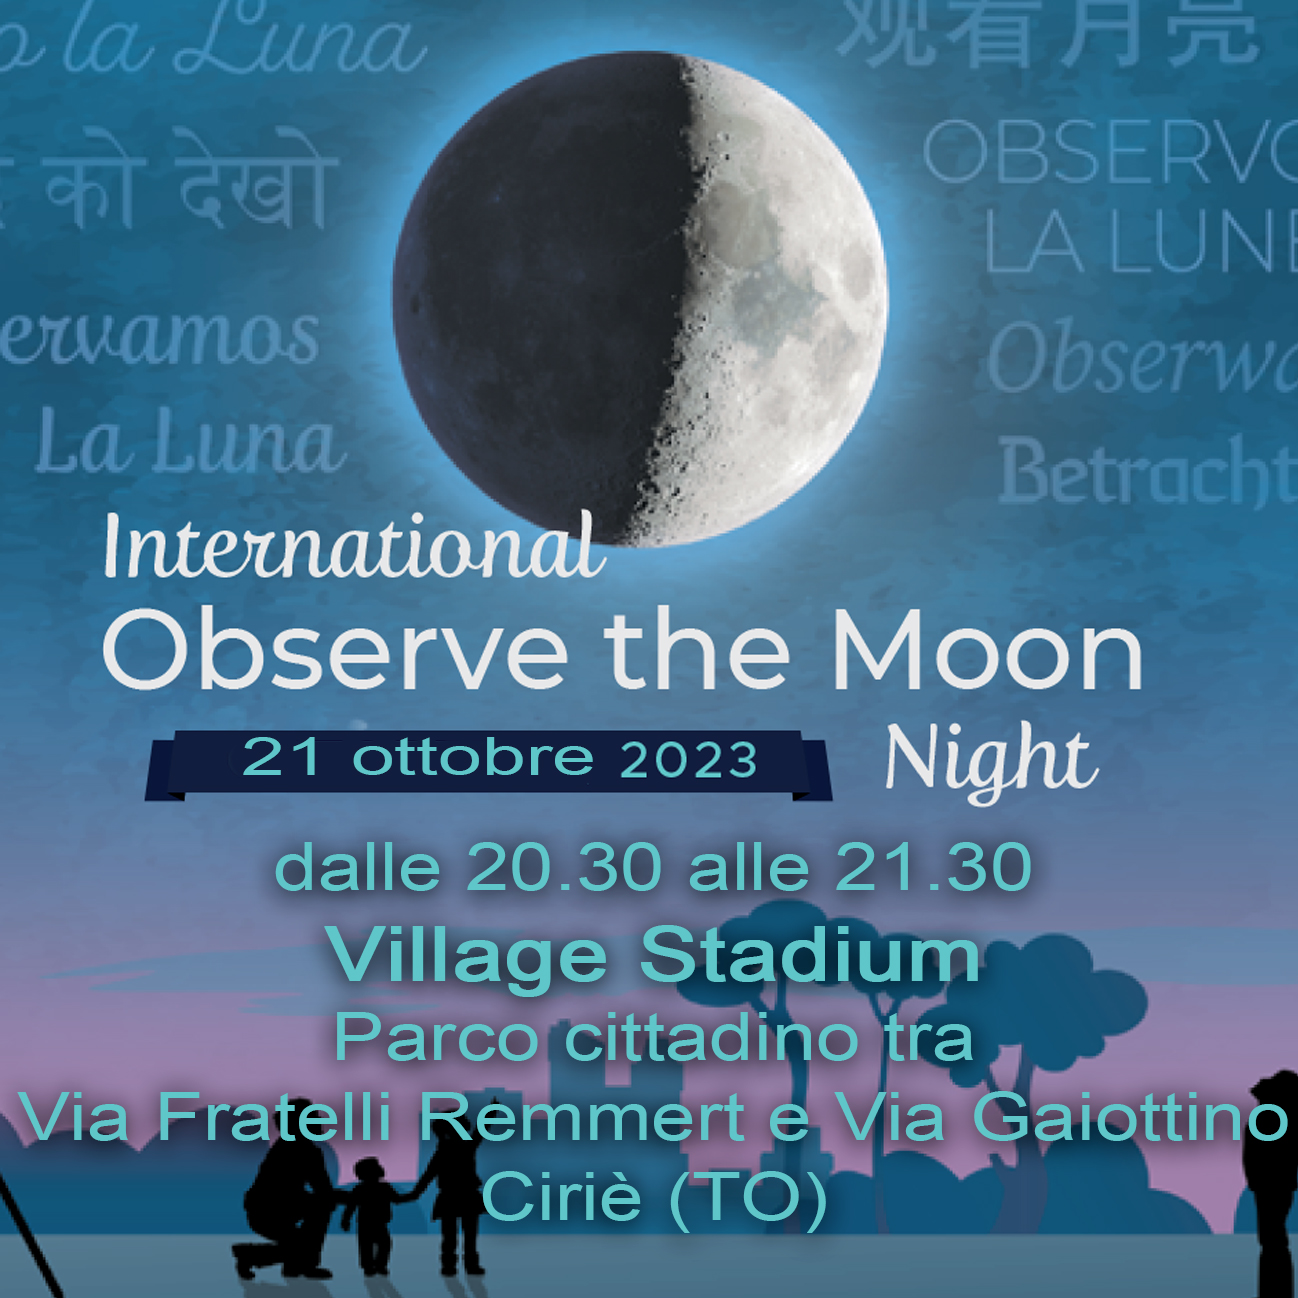 International Observer the Moon Night 2023